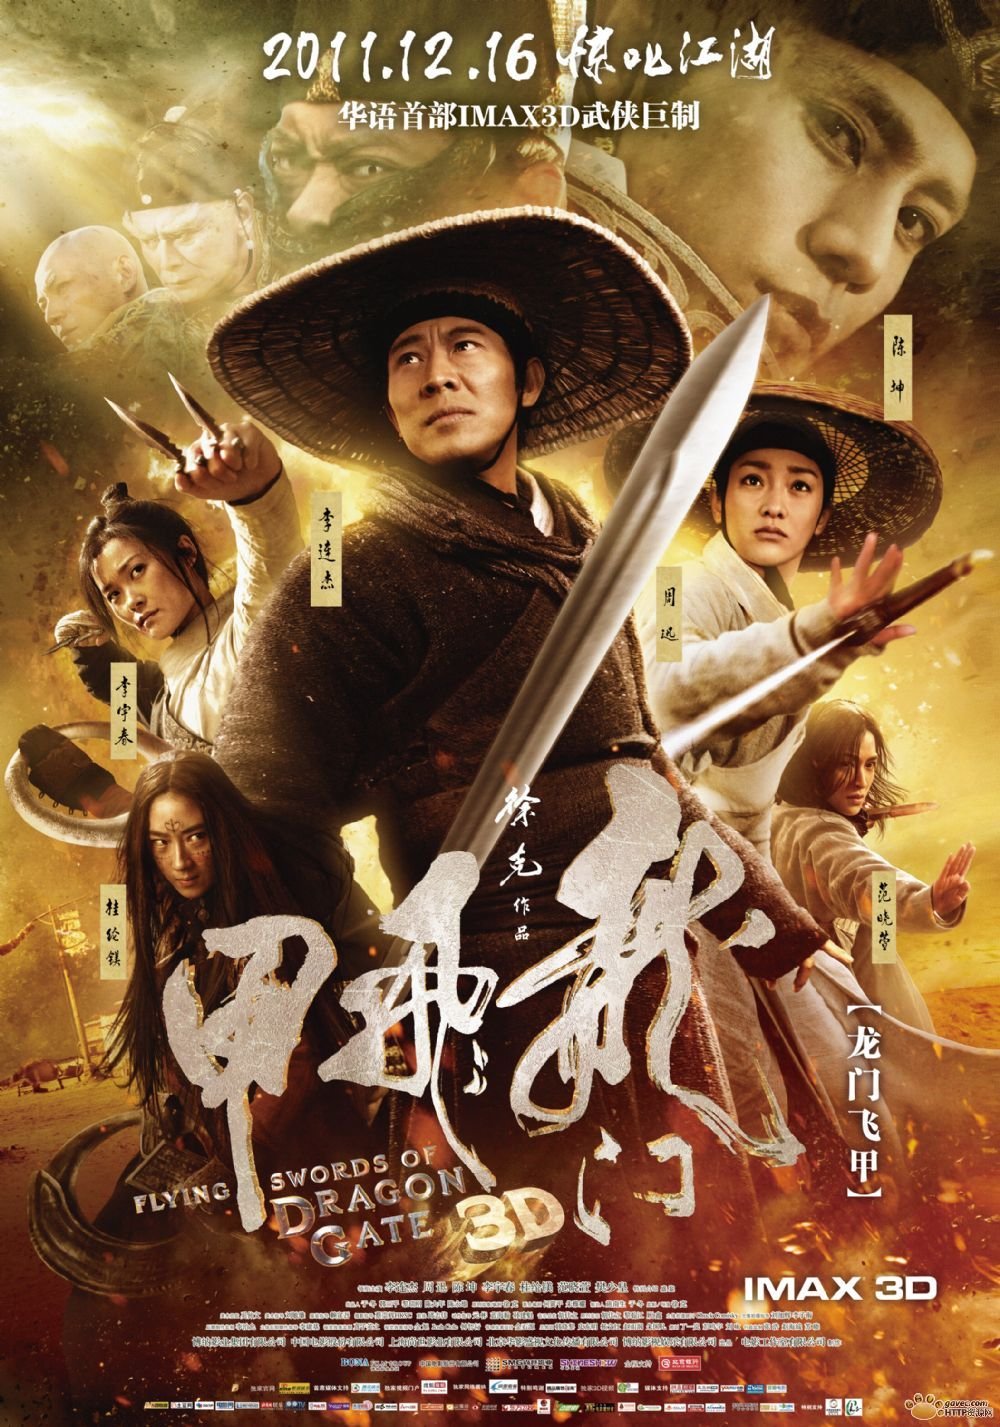 L'affiche originale du film Long men fei jia en mandarin